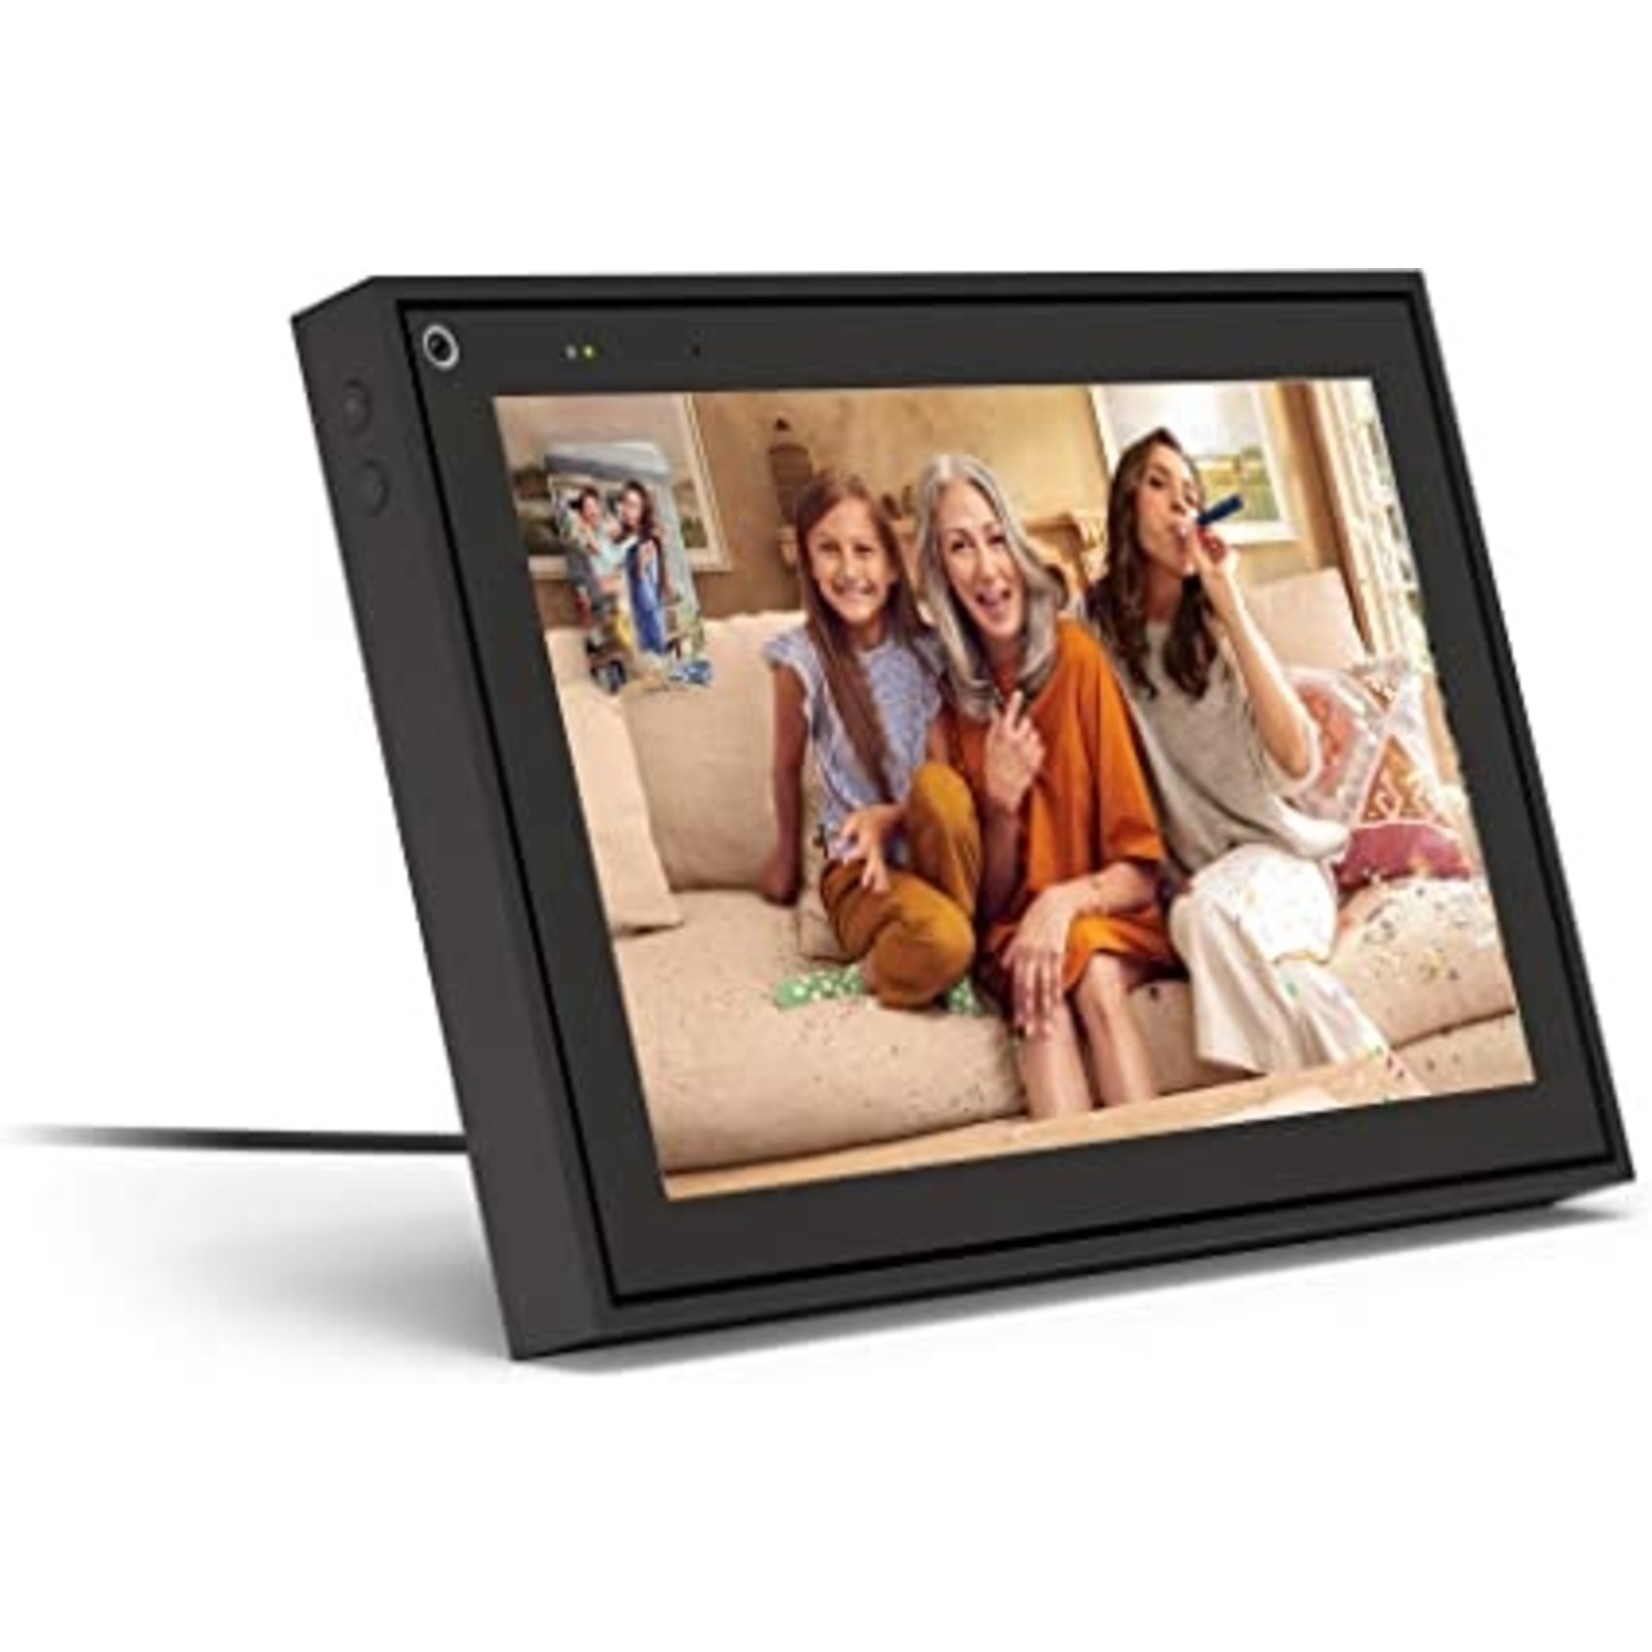 Nova Facebook Portal Smart Video Calling 10” Touch Screen Display with Alexa Black